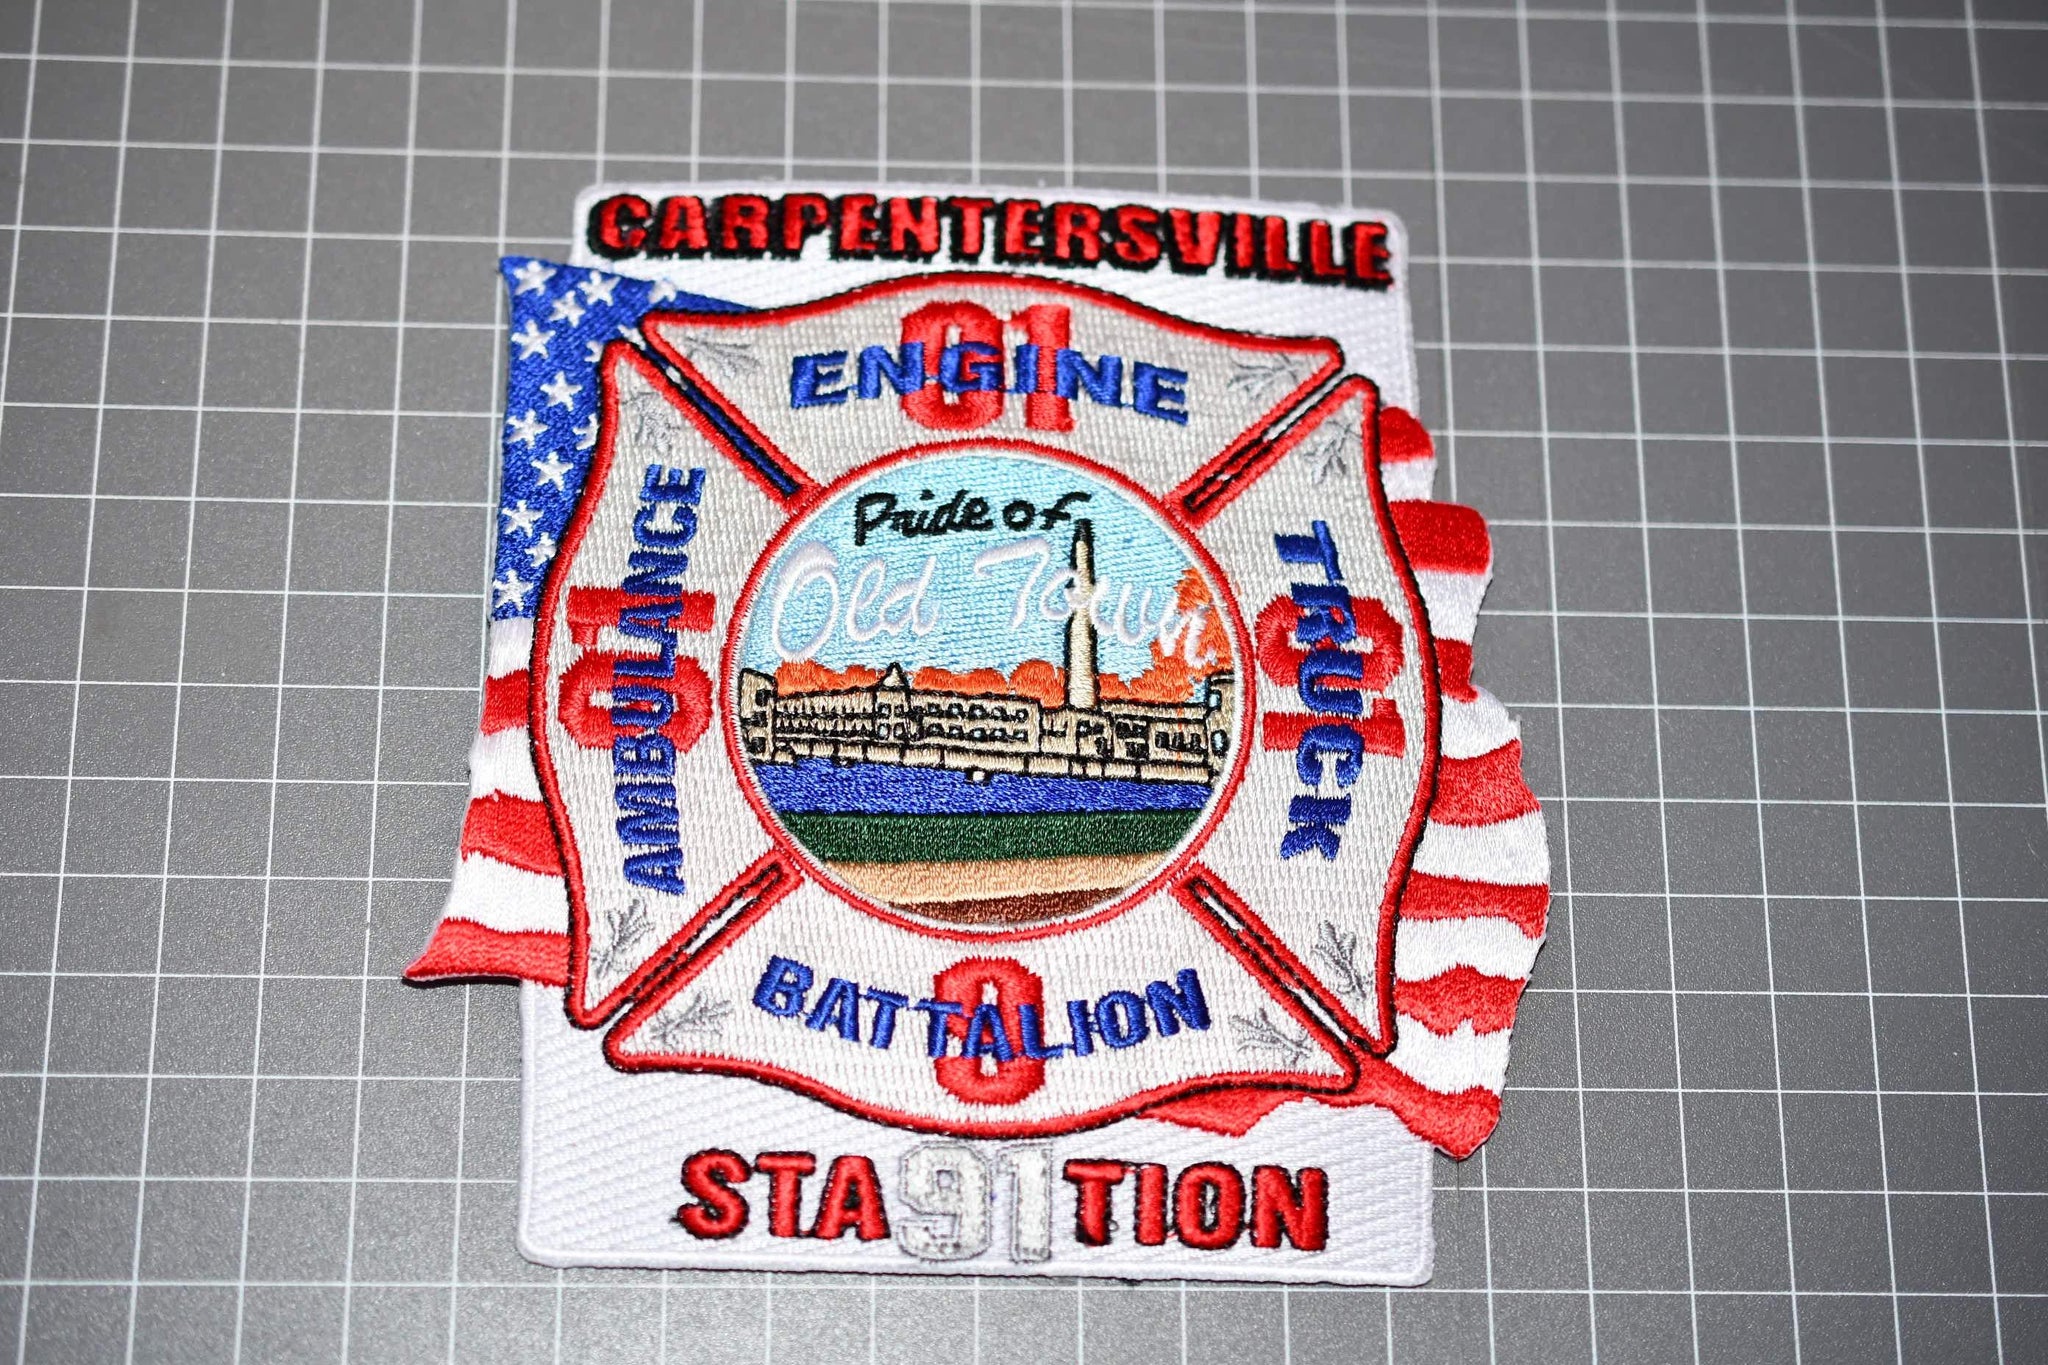 Carpentersville Fire Department Station 91 Patch (B19)